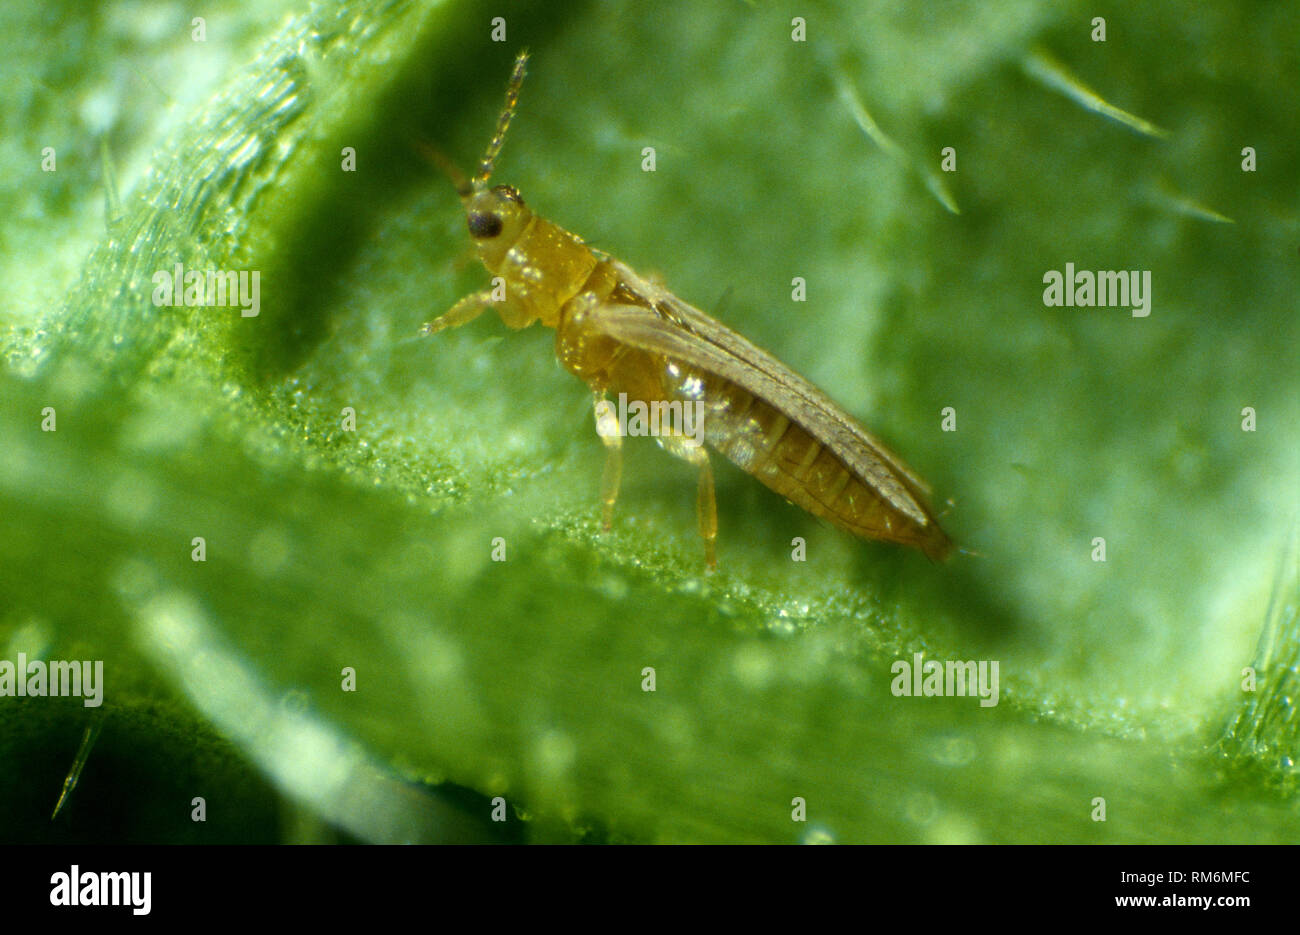 Onion o tabacco thrips (Thrips tabaci) parassiti adulti su una foglia Foto Stock